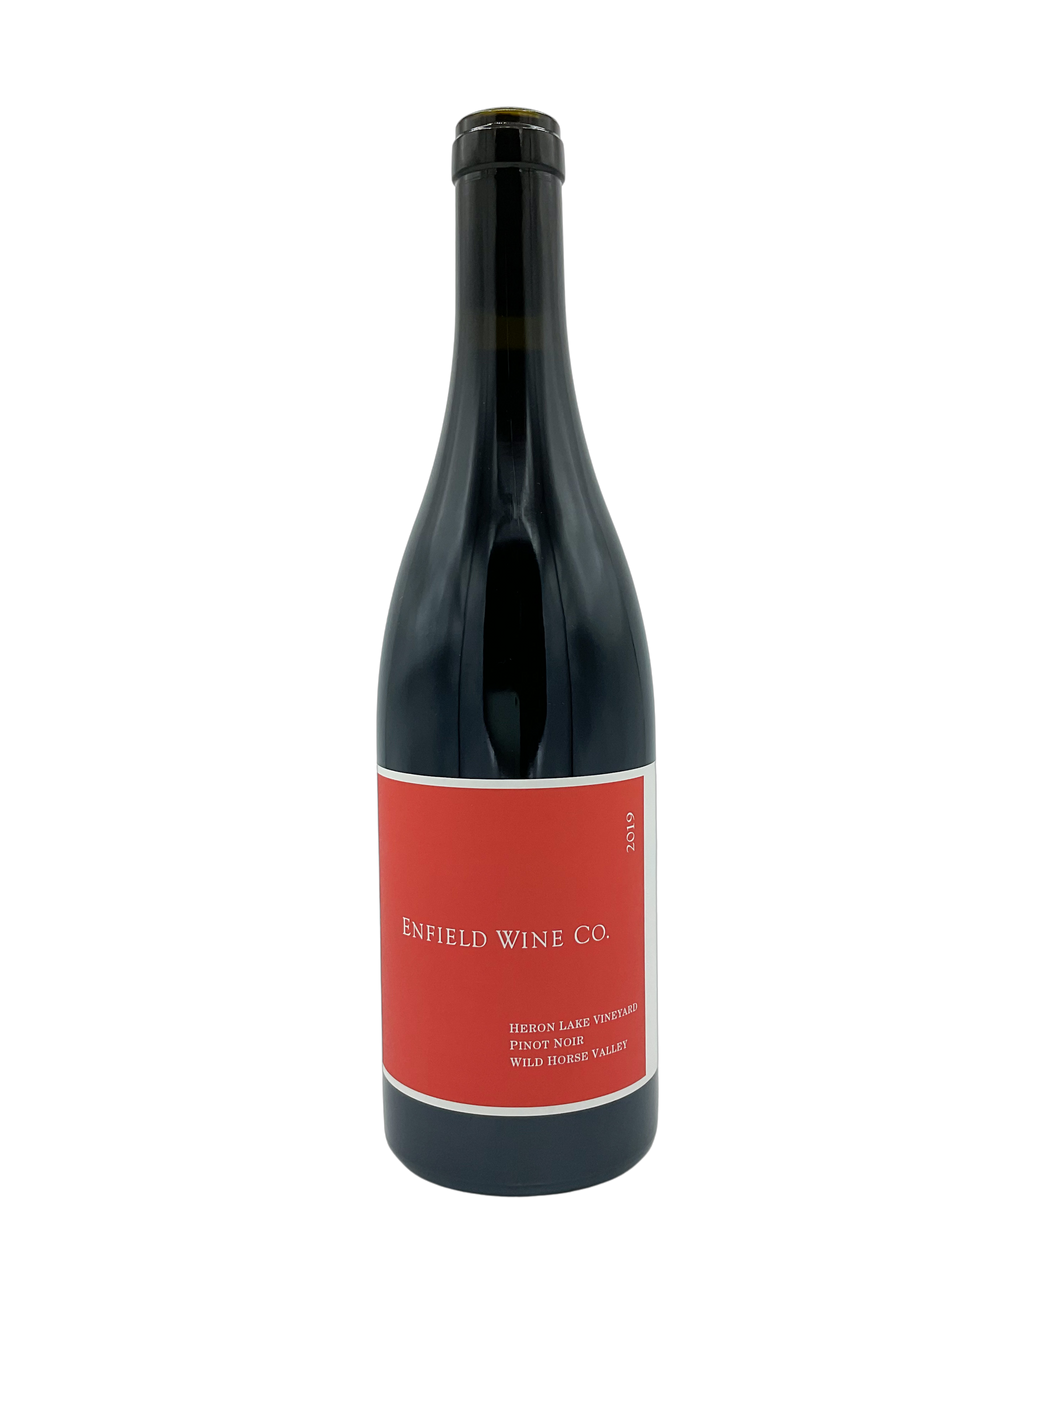 Enfield Wine Co. 2019 Heron Lake Vineyard Pinot Noir